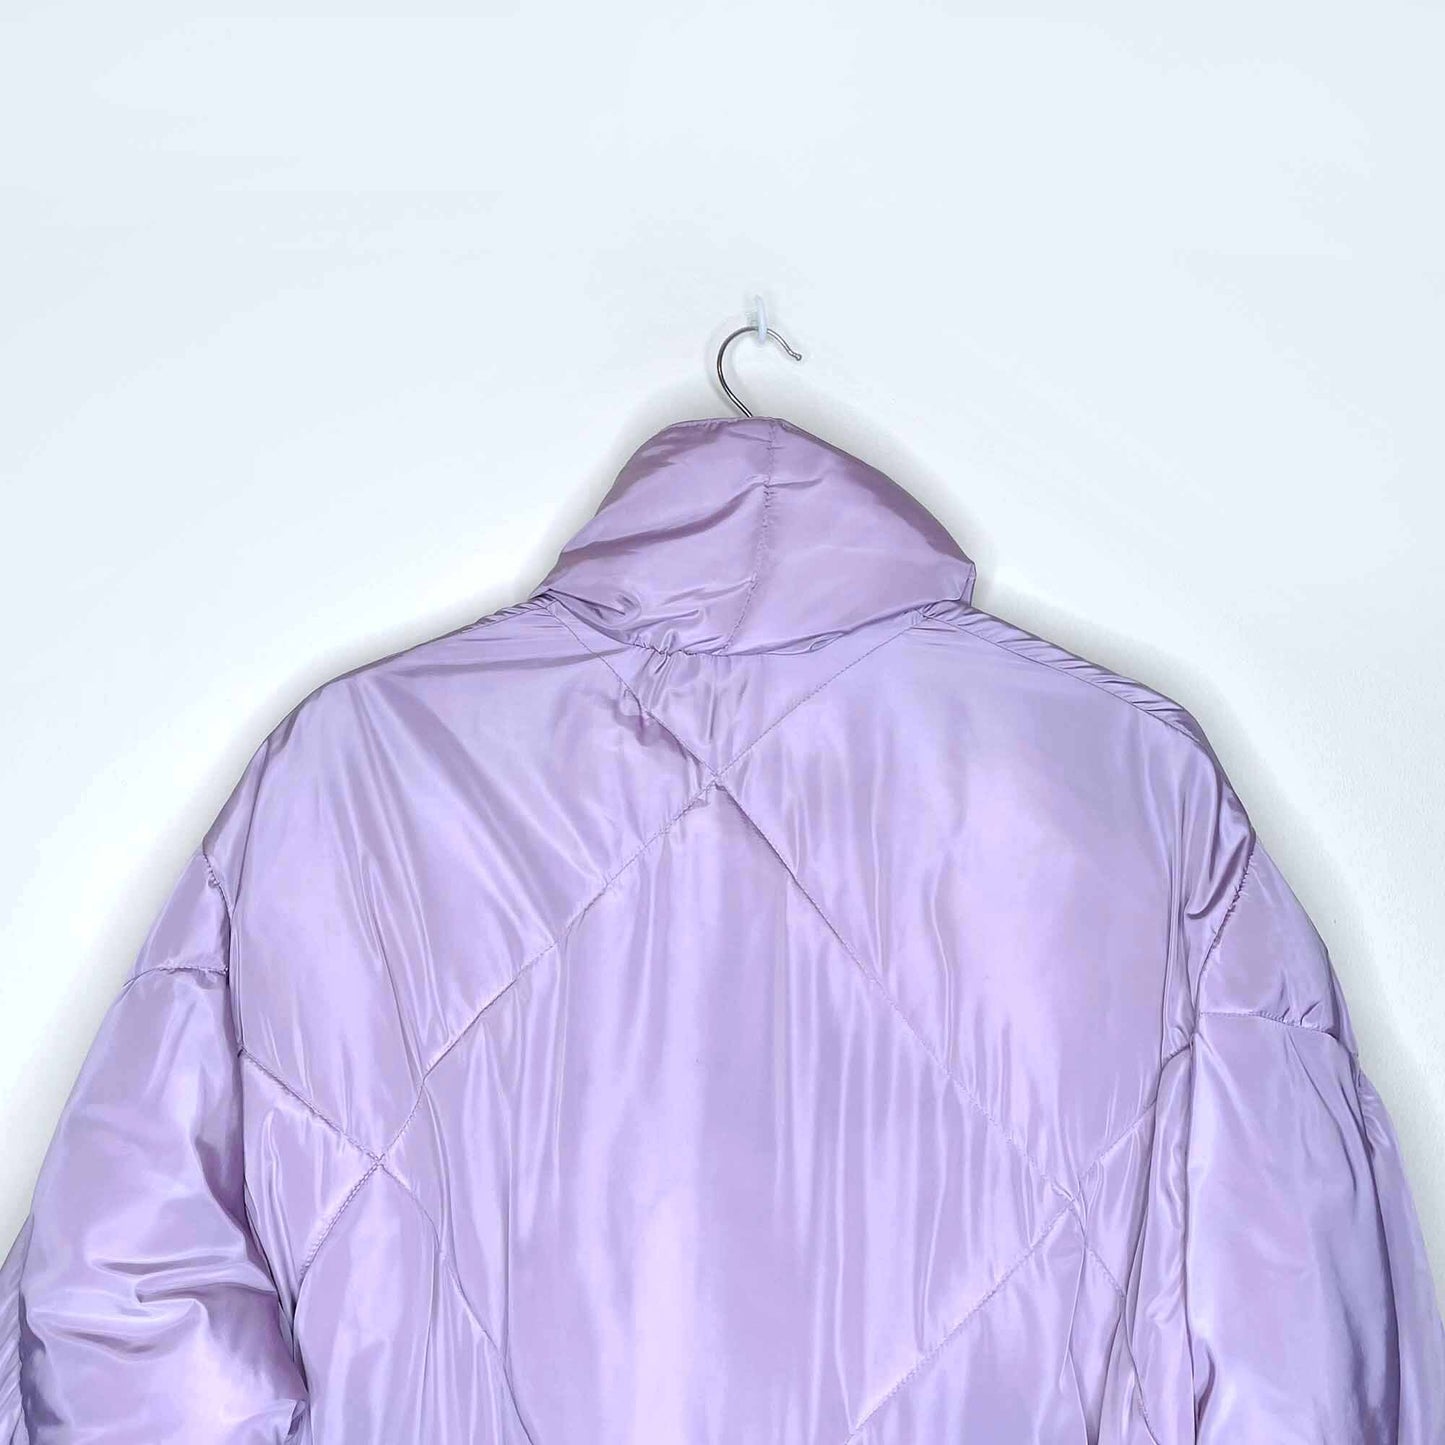 free people oversized ella puffa puffer jacket in lilac - size xs